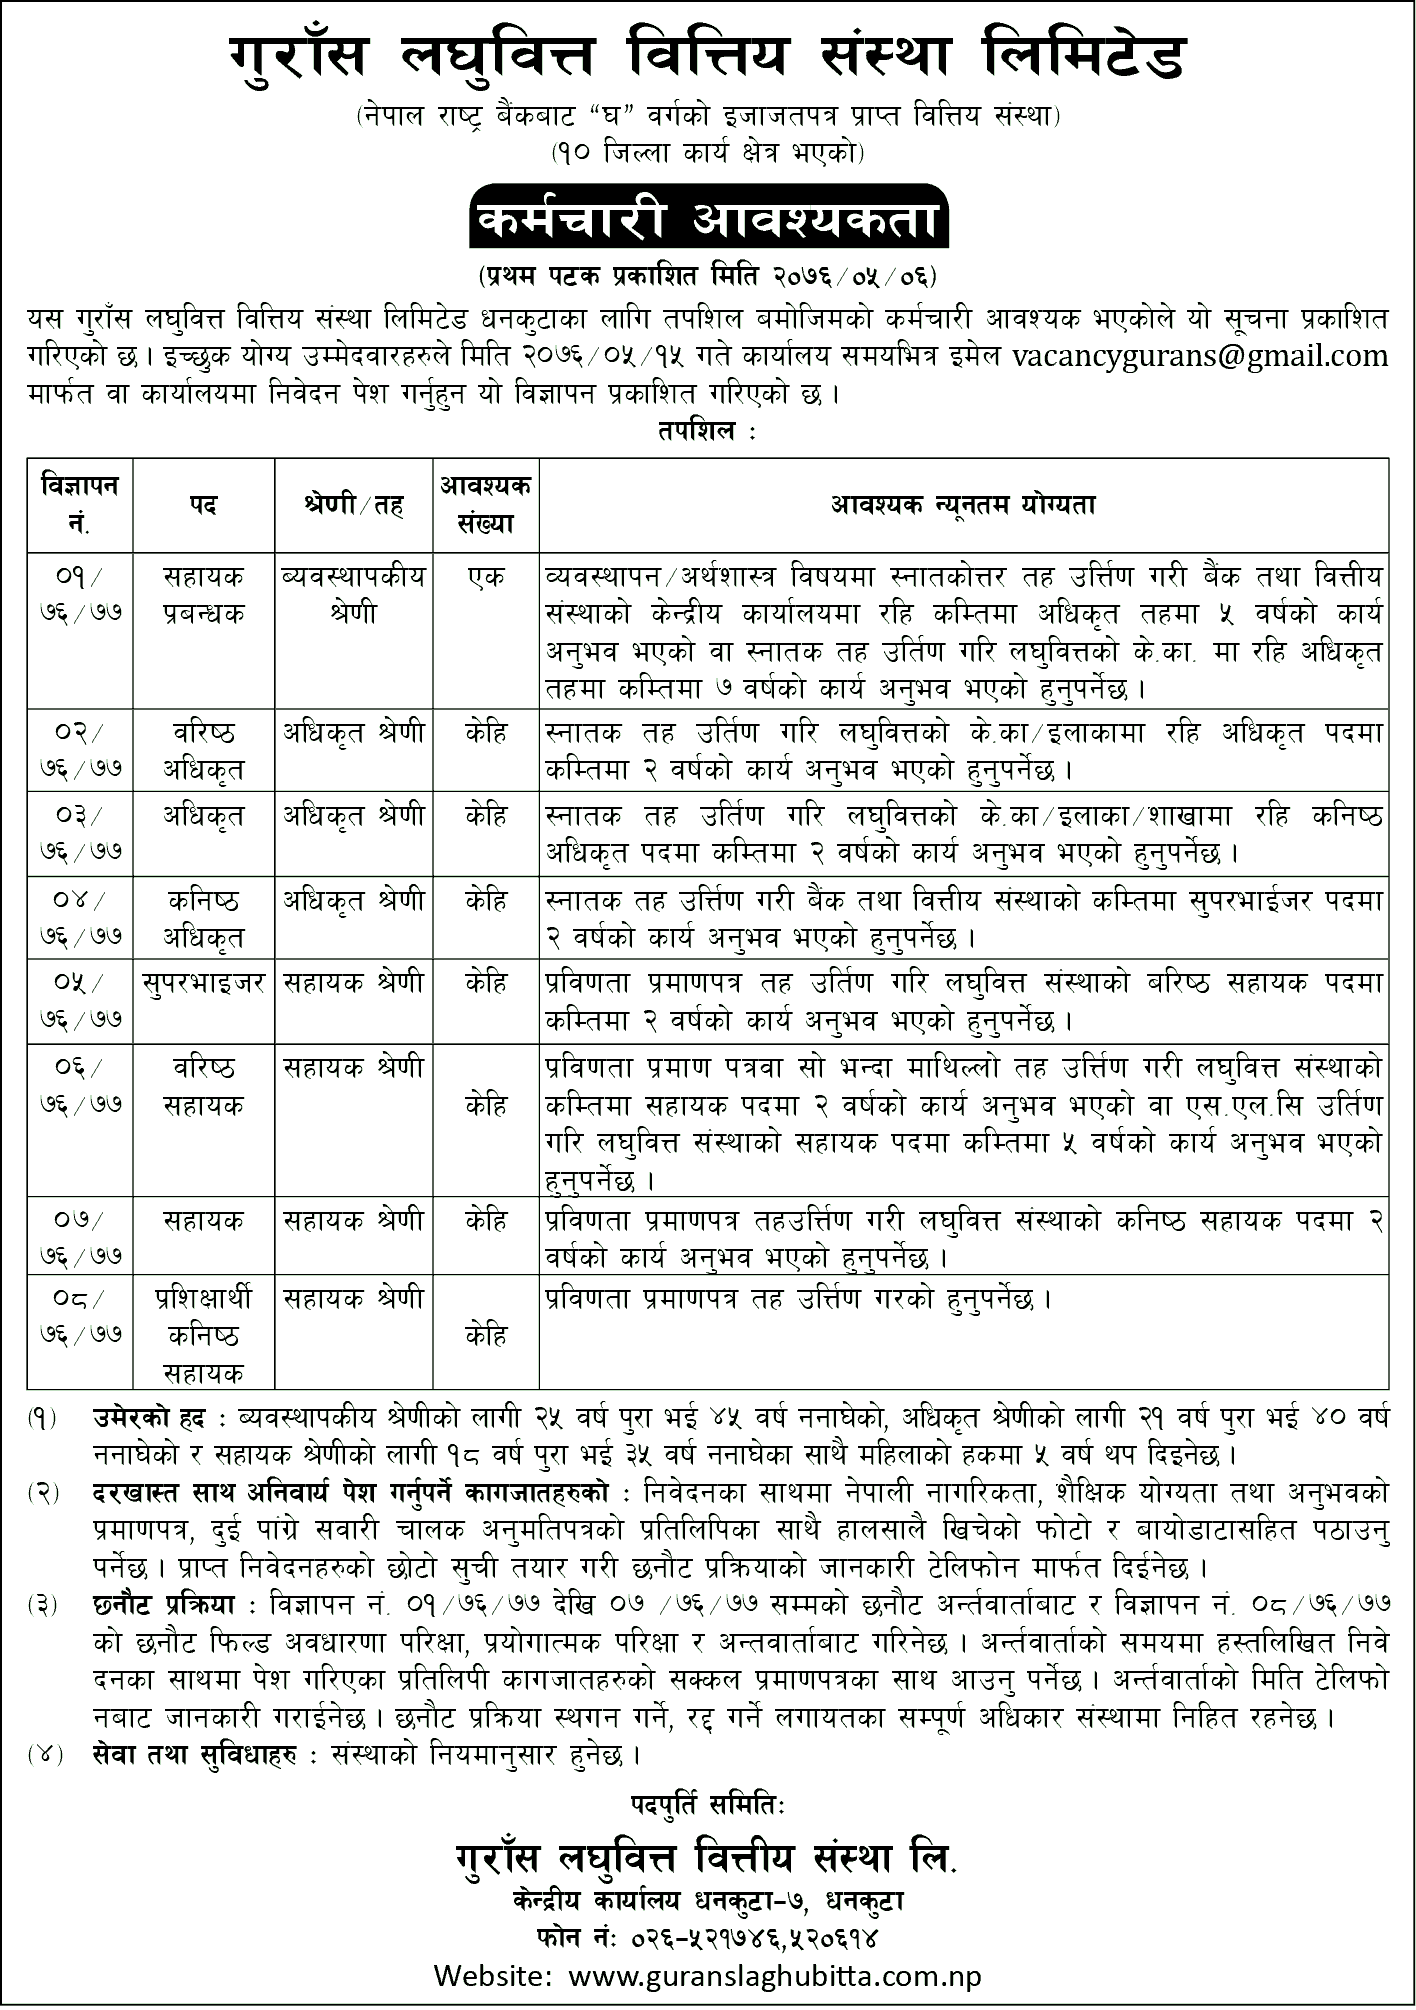 Gurans Laghubitta Bittiya Sanstha Vacancy for Various Positions